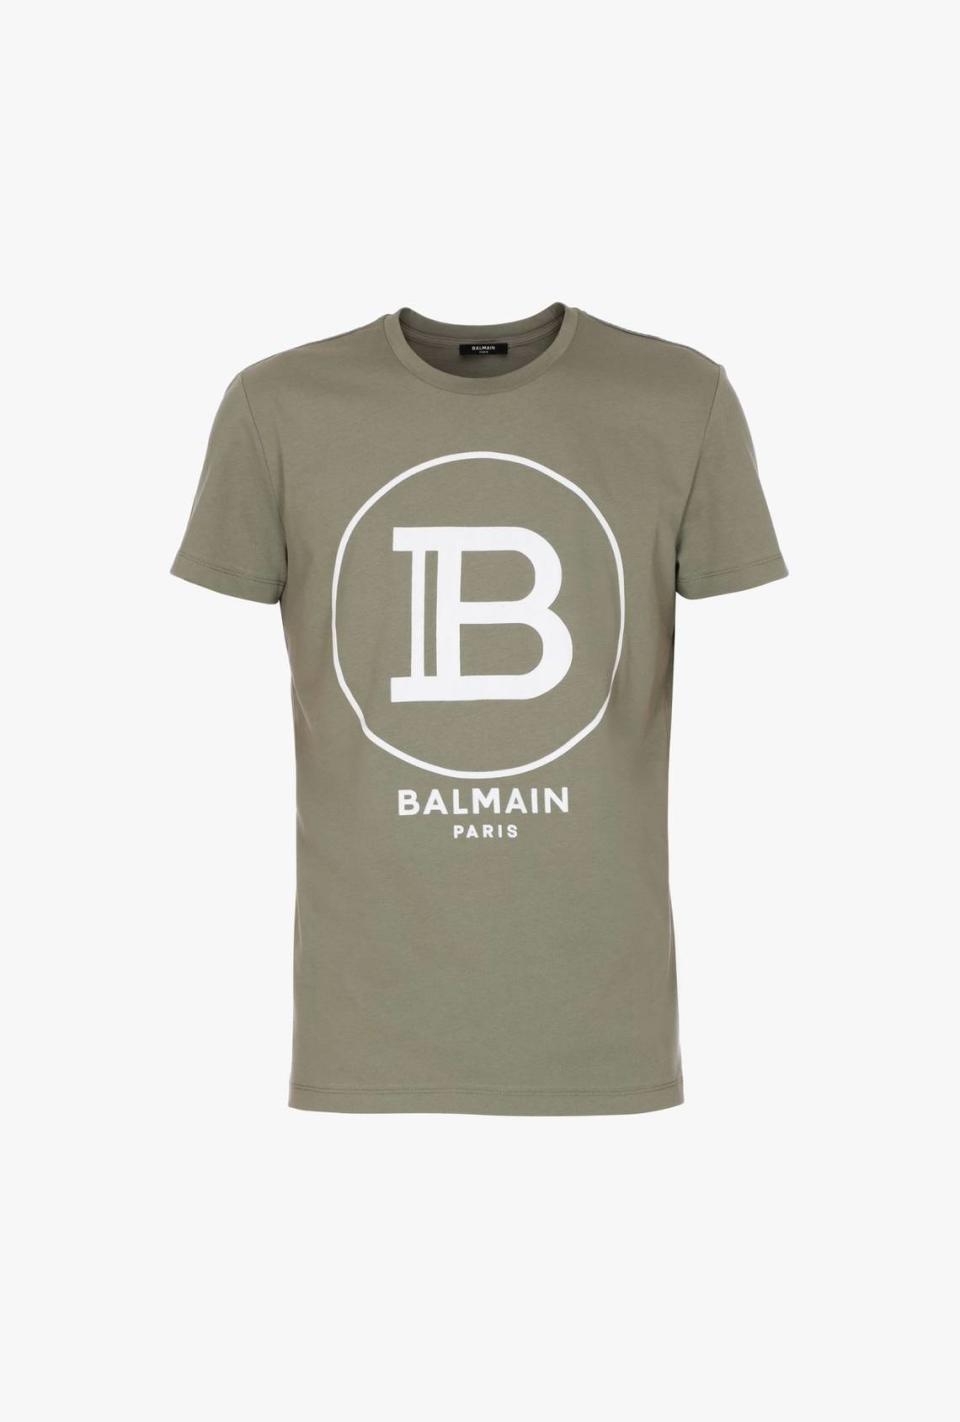 Khaki cotton T-shirt with white logo, $395. Balmain at Bal Harbour Shops. 9700 Collins Avenue; 305-397-8152. 